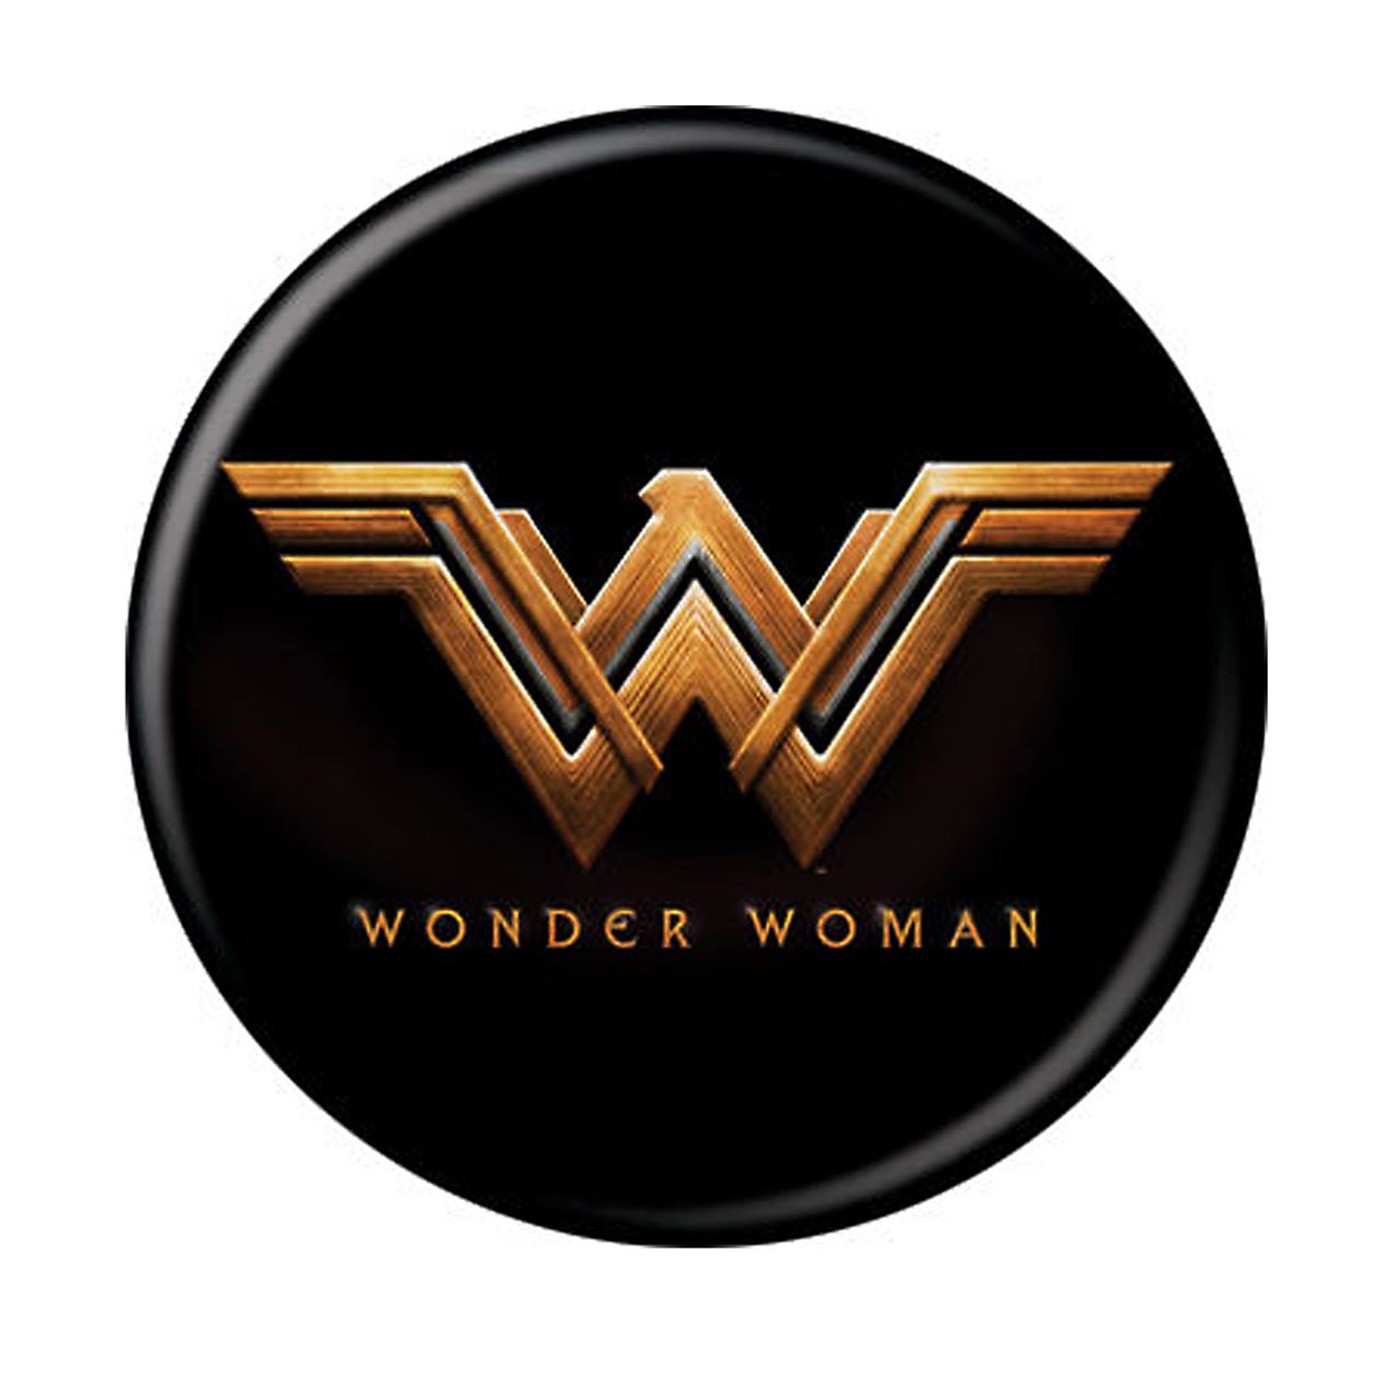 Wonder Woman Movie Logo Black Button